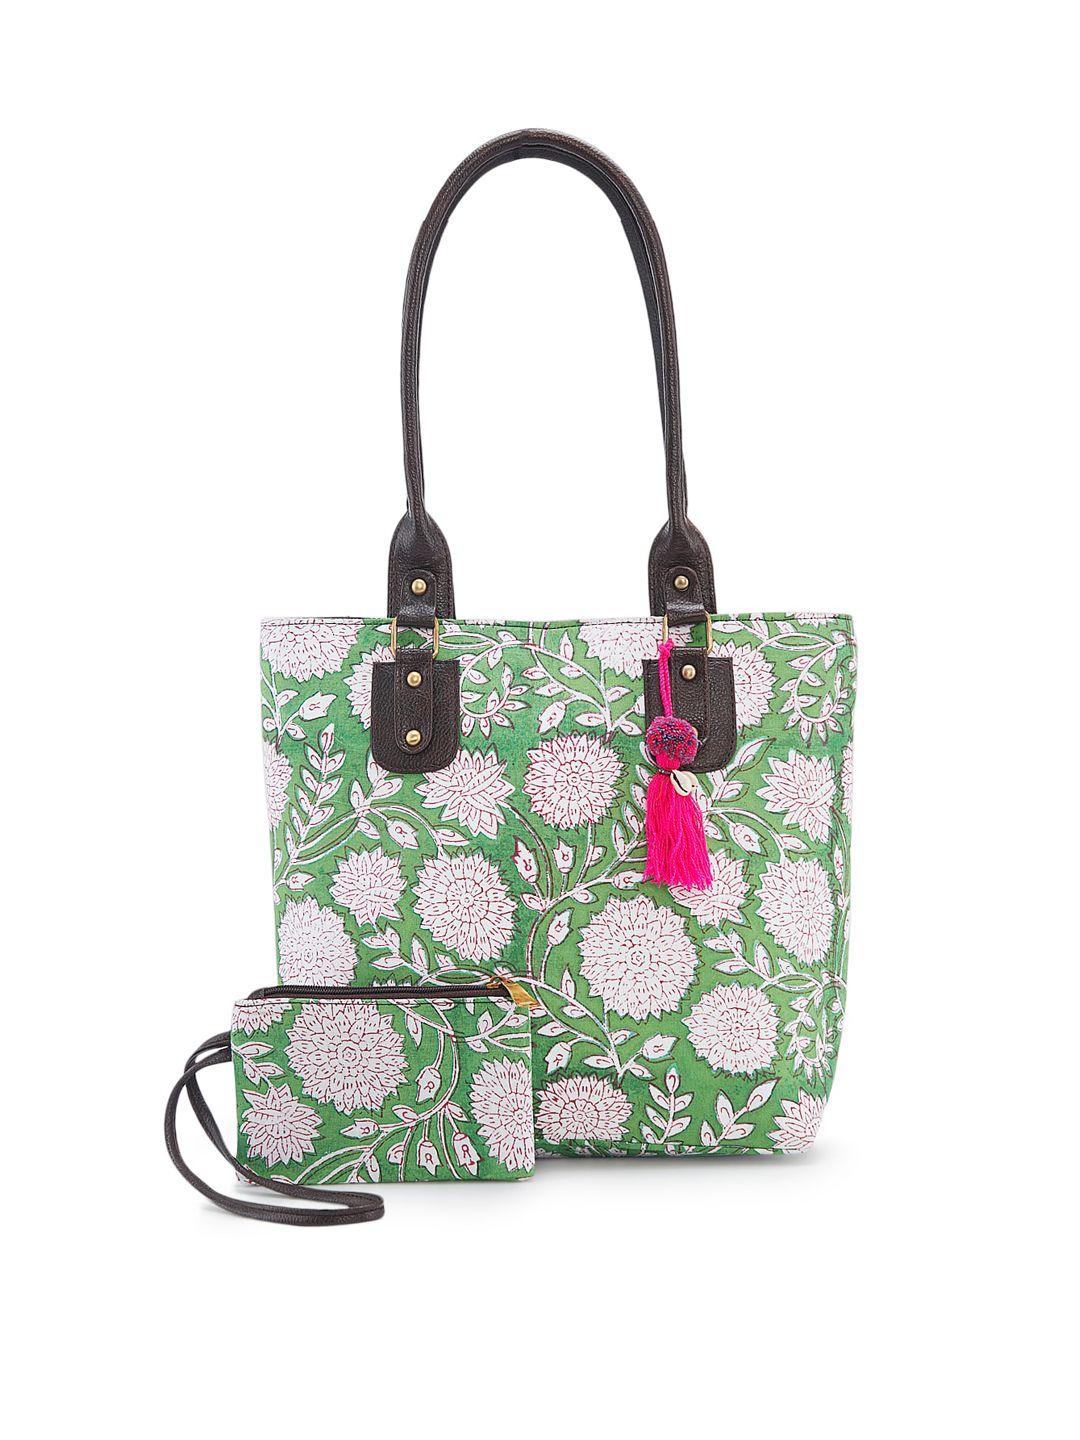 nepri green structured handheld bag with tasselled